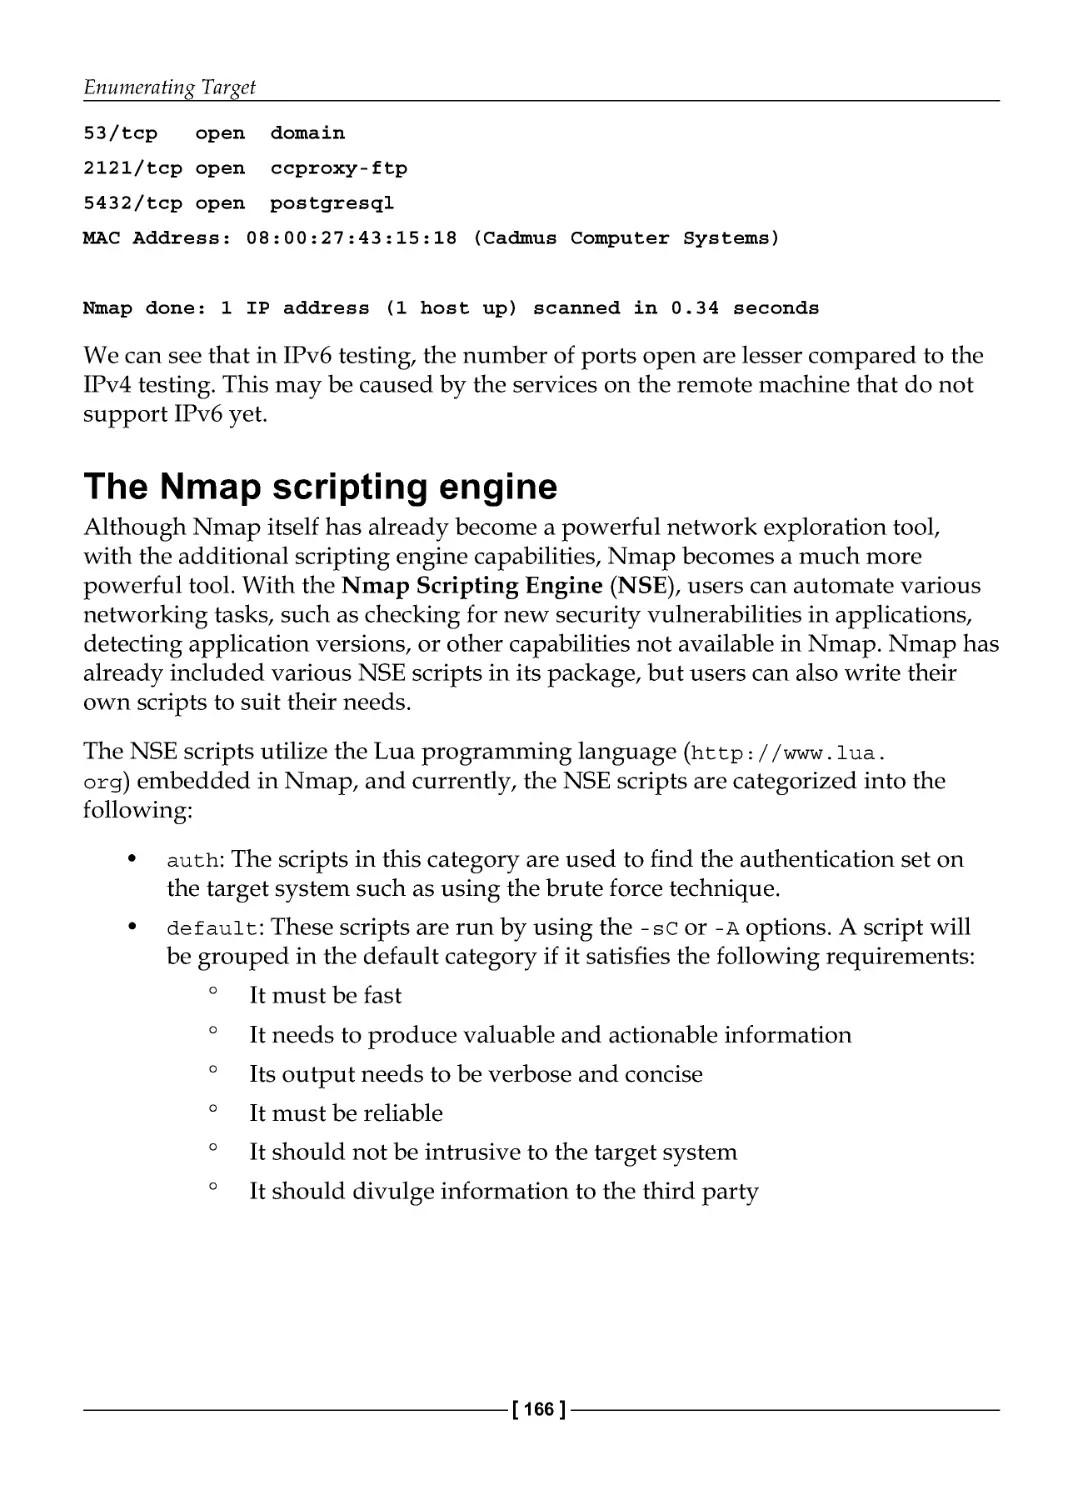 The Nmap scripting engine